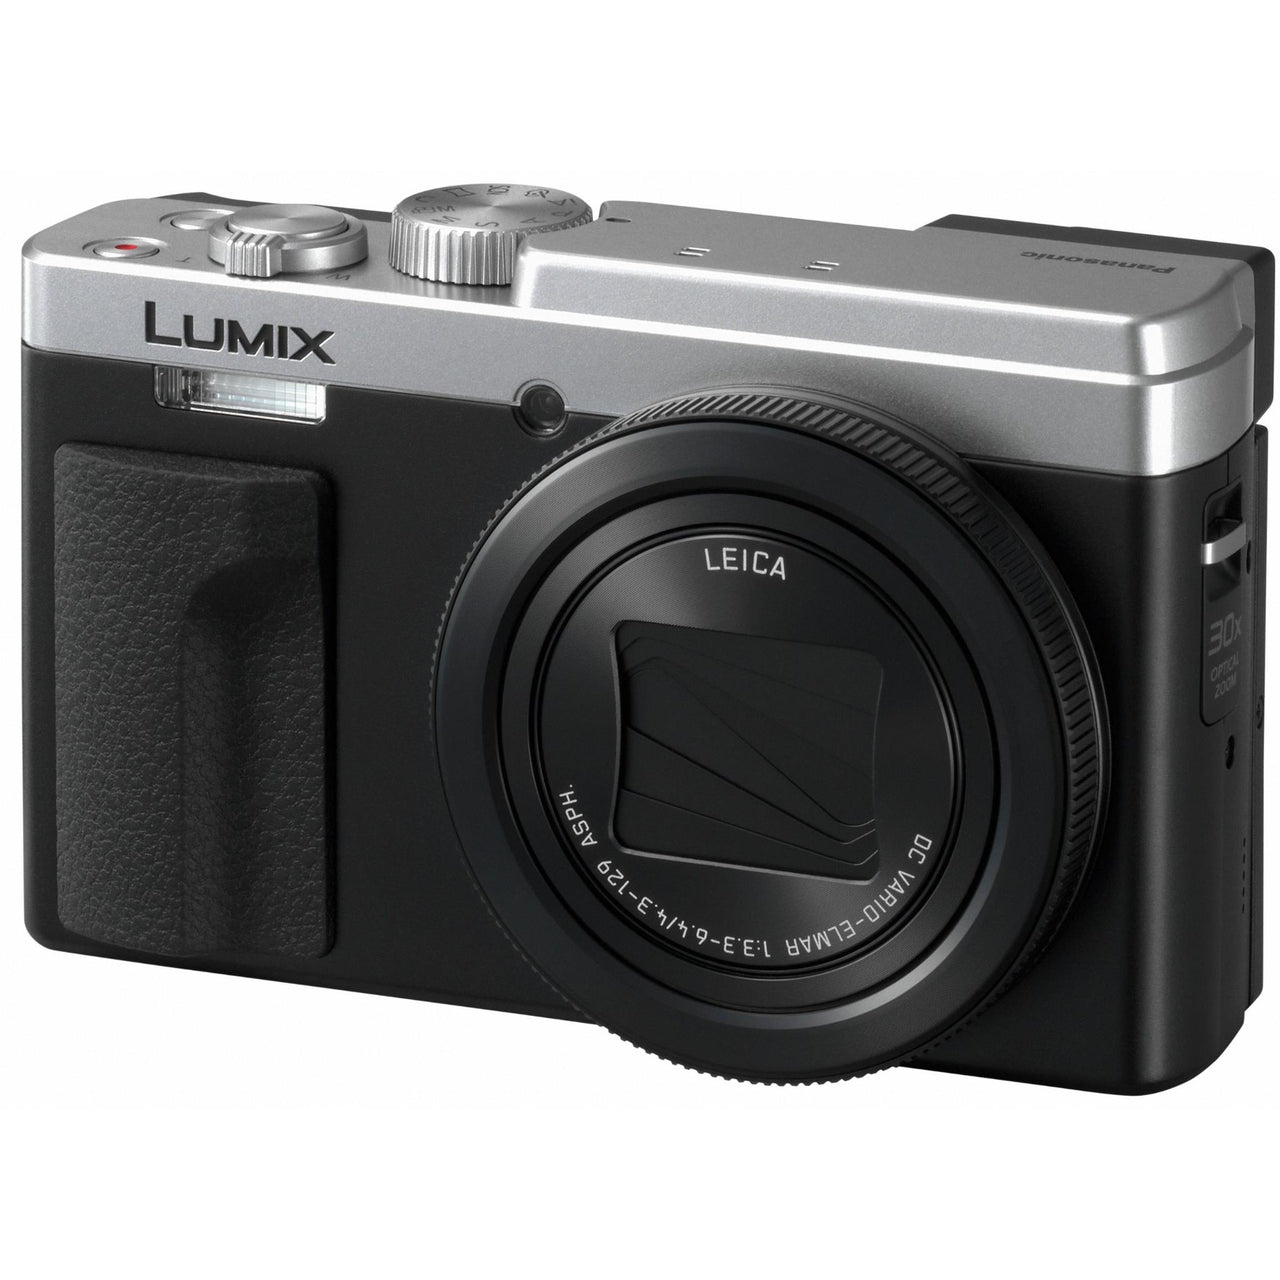 Panasonic Lumix DMC-TZ95 Compact Digital Camera - Silver Panasonic